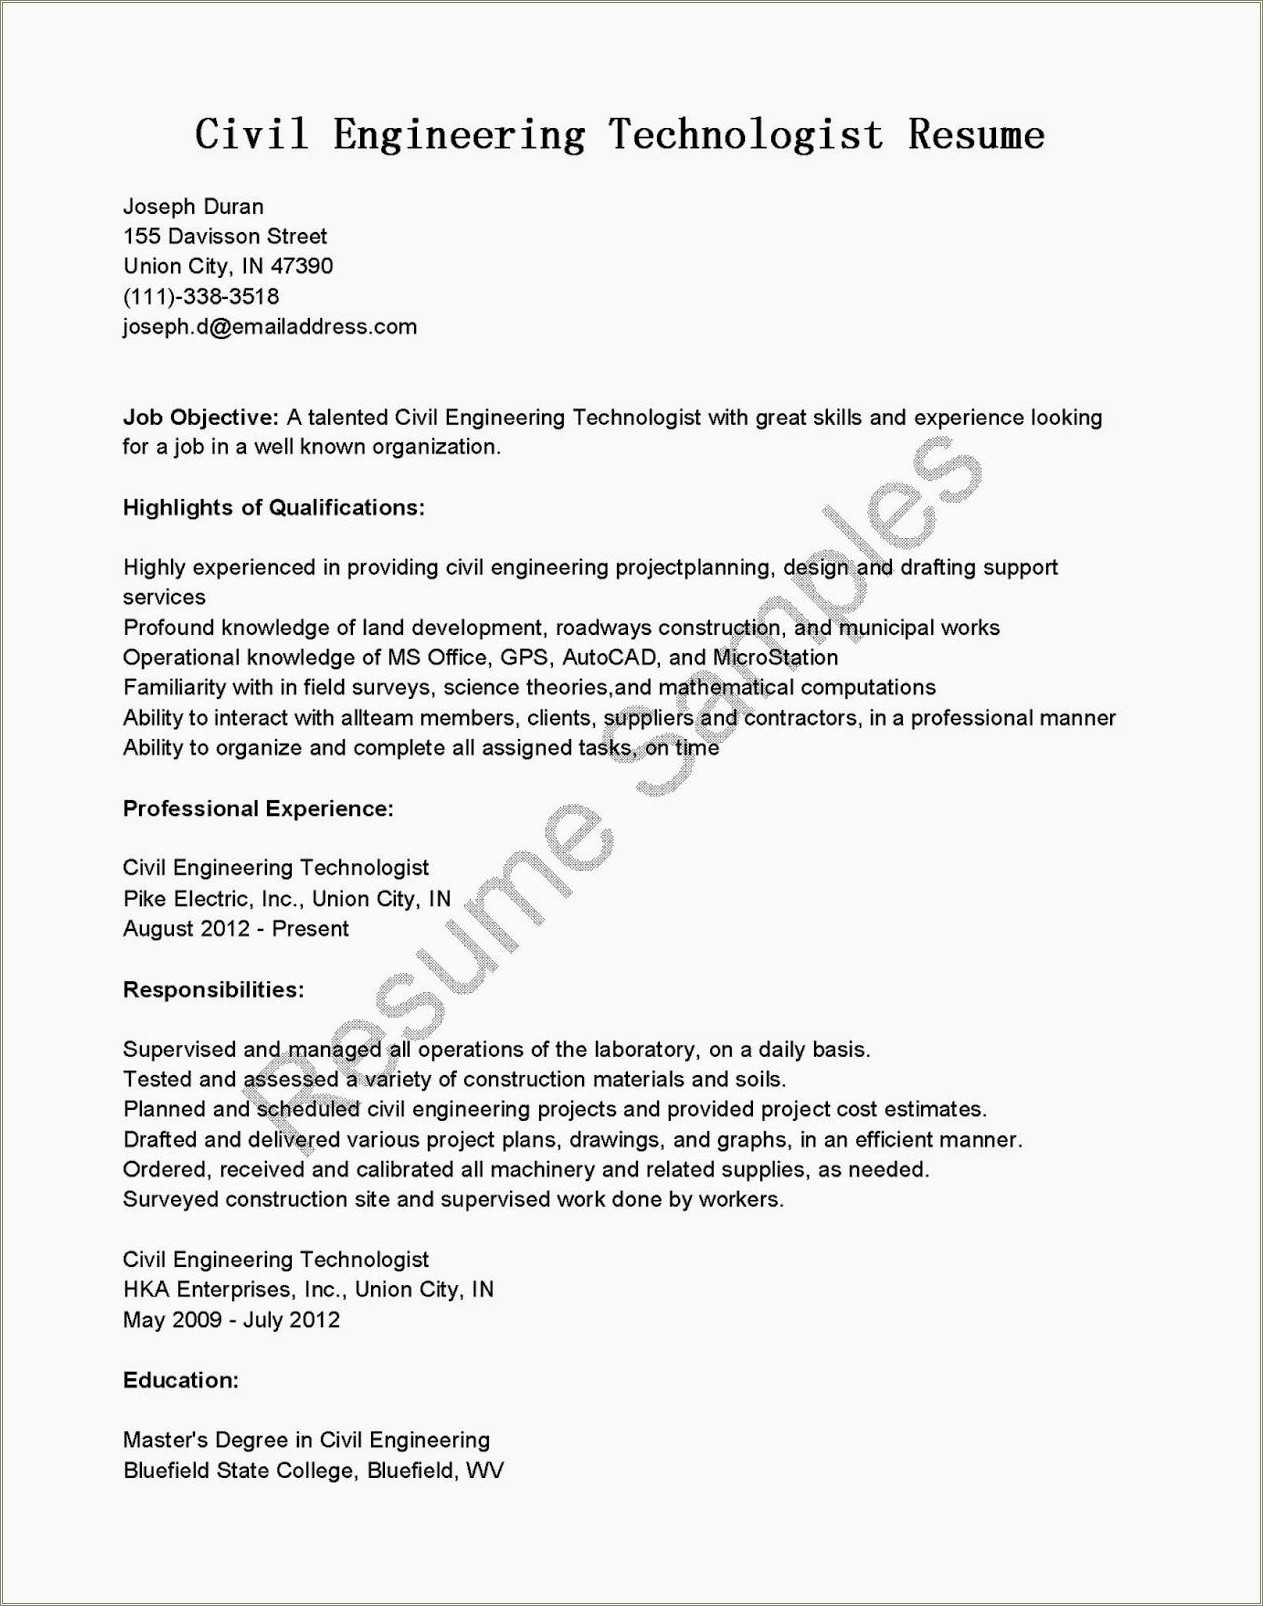 Civil Engineering Technician Resume Objective